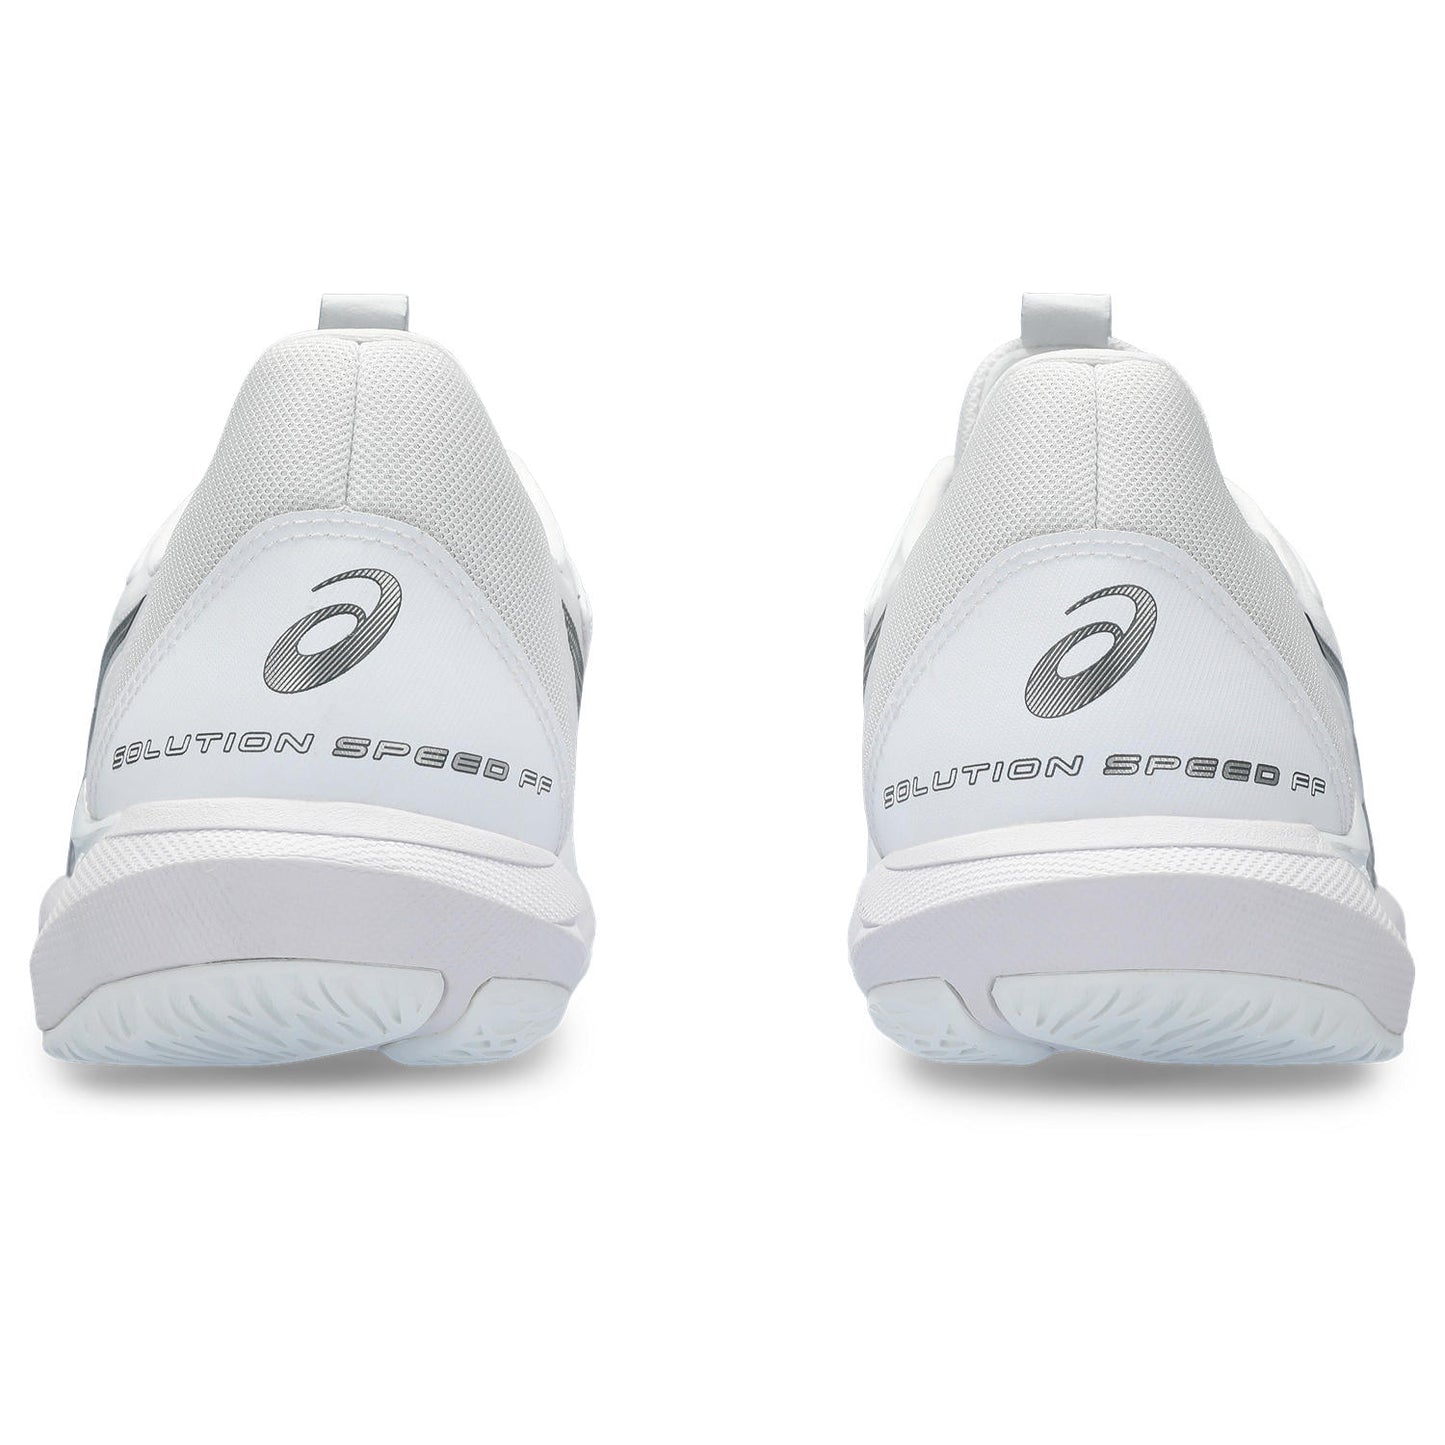 Asics Solution Speed FF women's tennis shoes 250.101 White/Metropolis